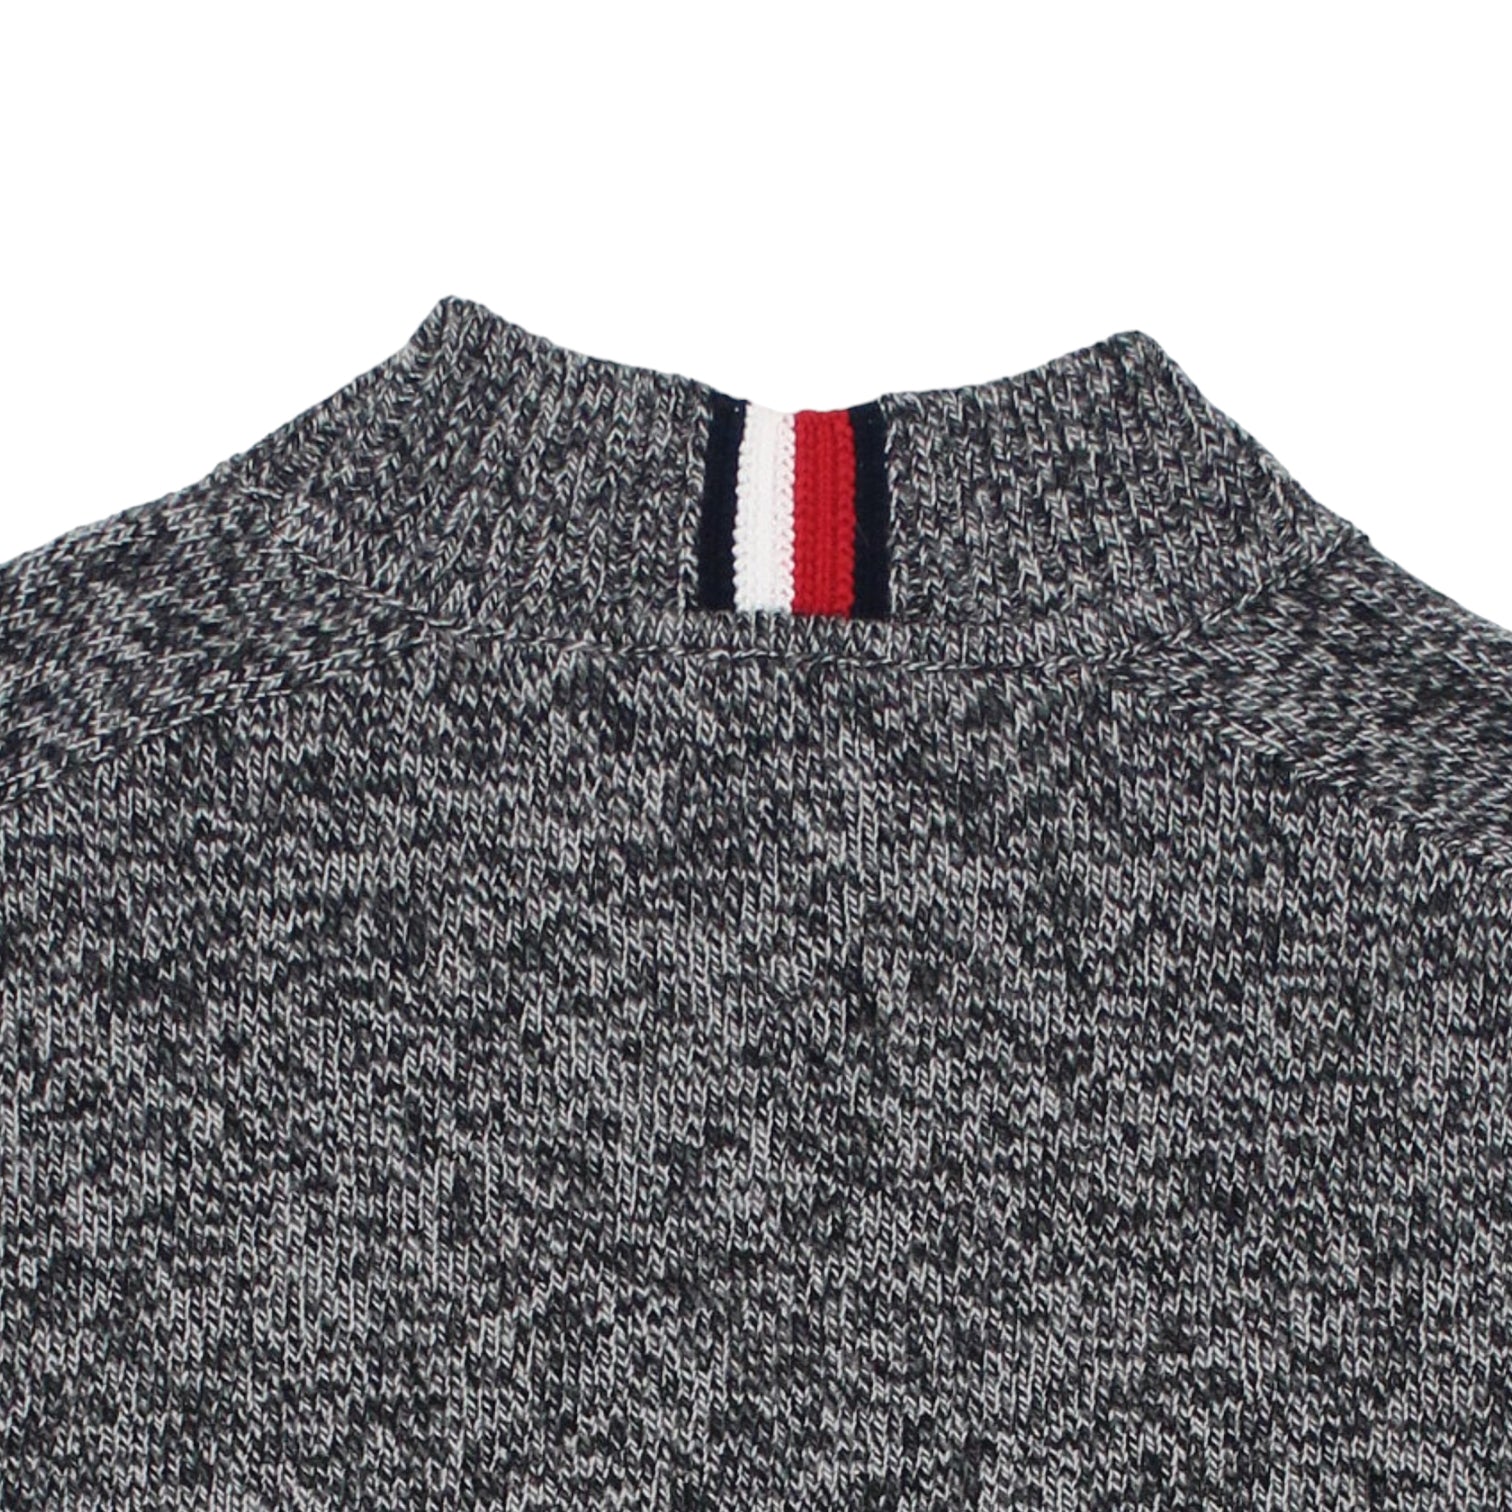 Tommy Hilfiger Grey Fleck Sweater